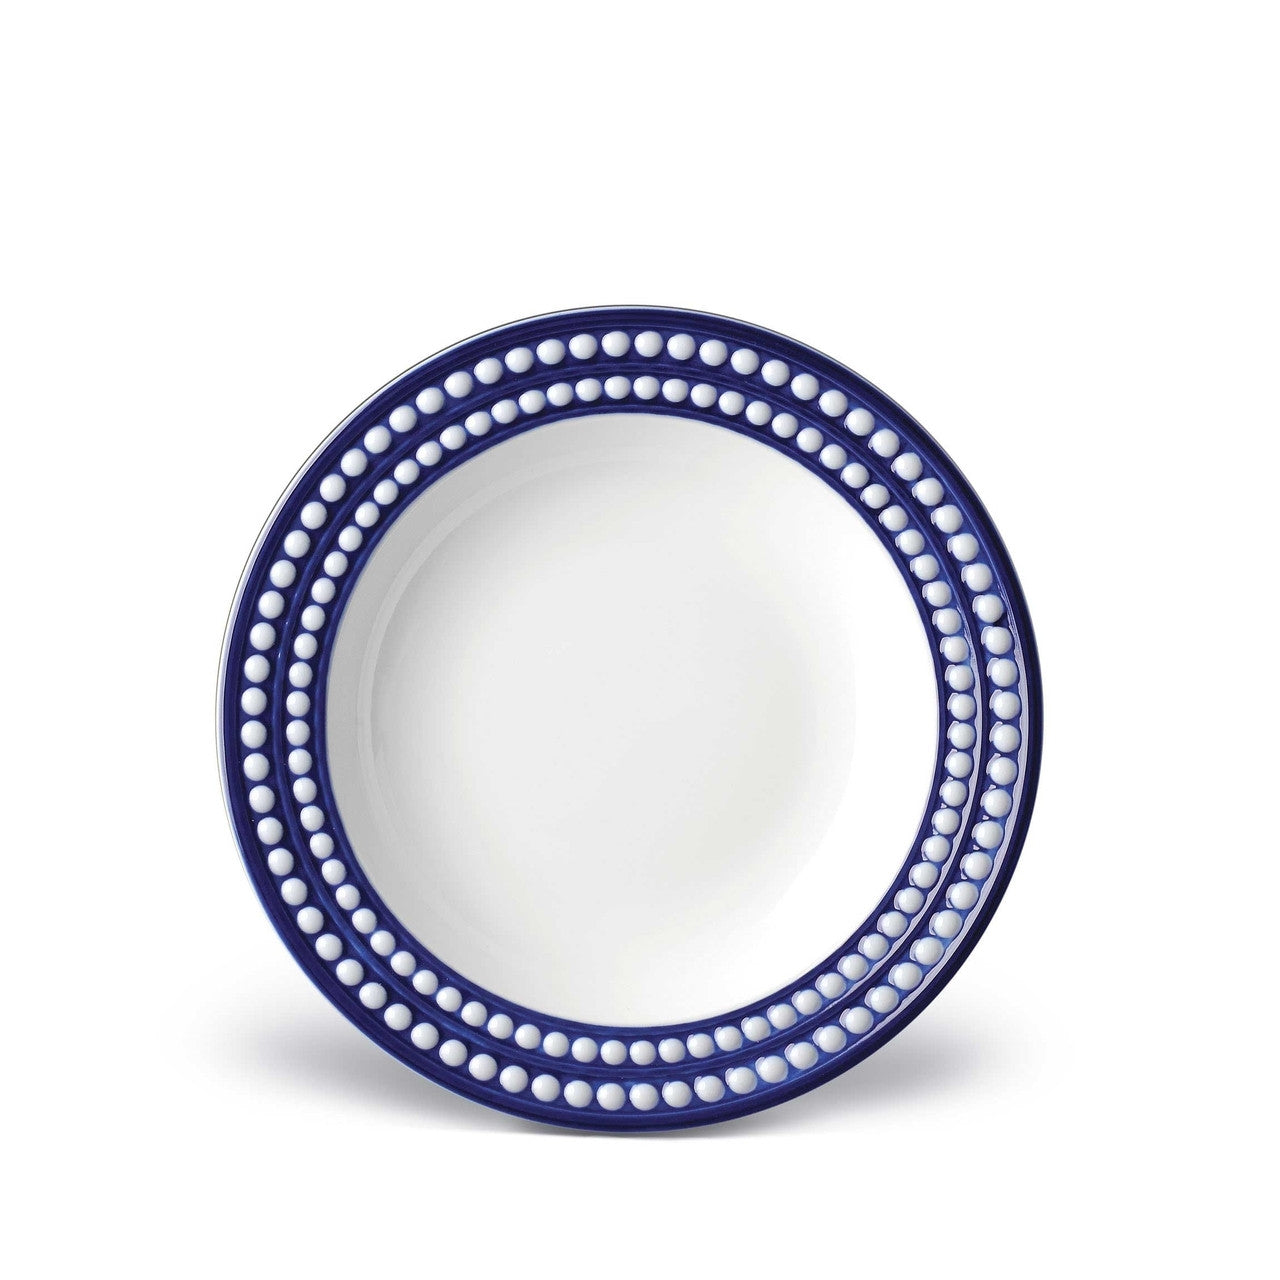 Perlee Bleu Soup Plate - RSVP Style